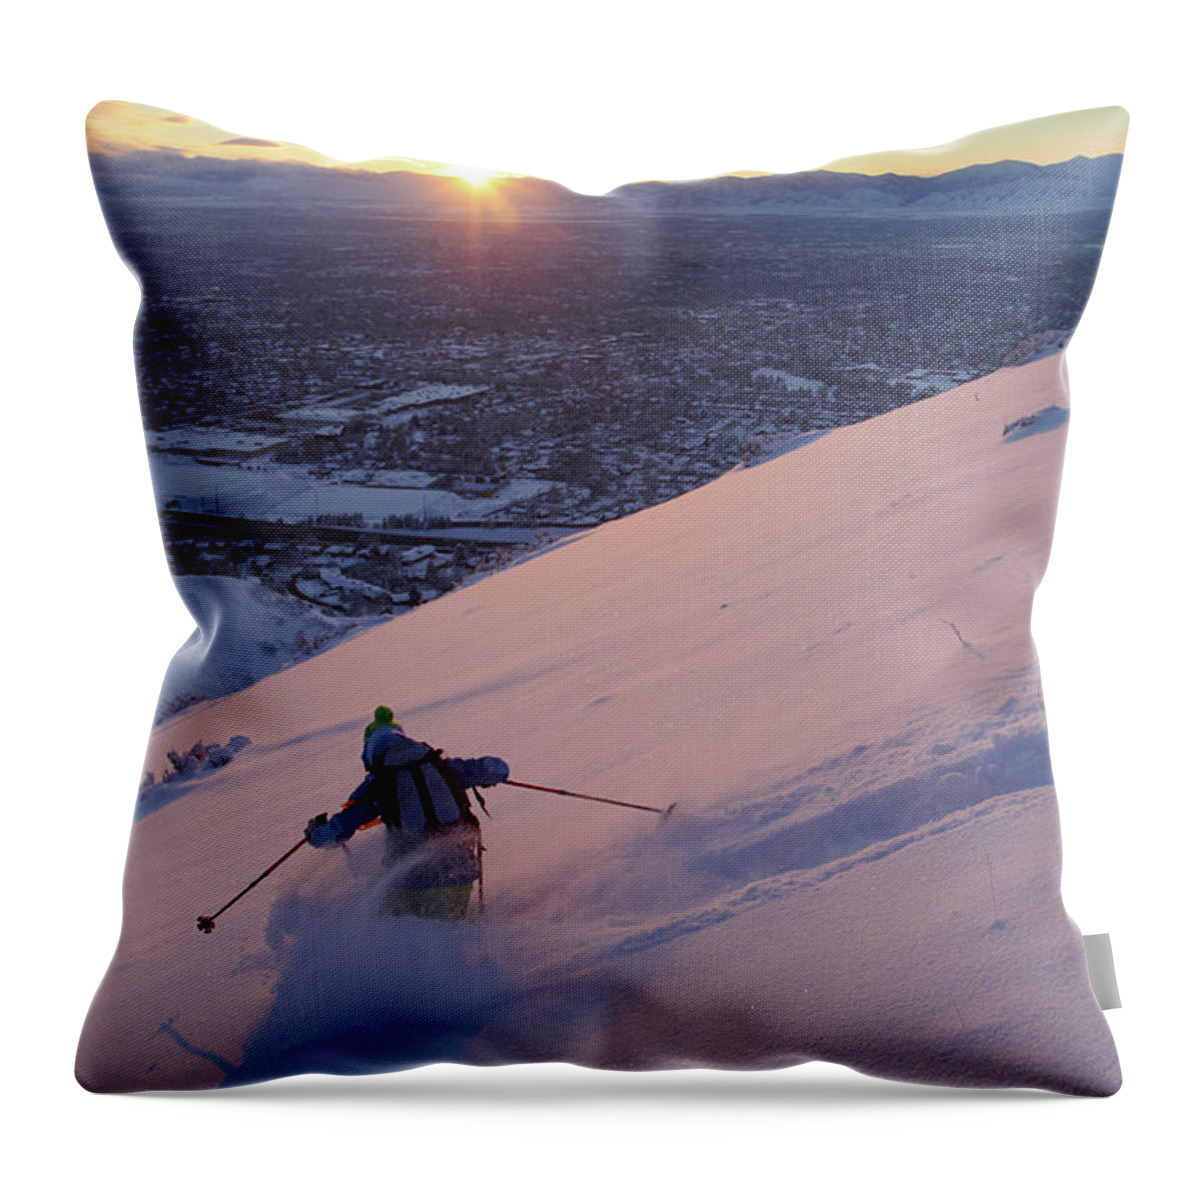 Ski Throw Pillow featuring the photograph Salt Lake City Skier by Brett Pelletier